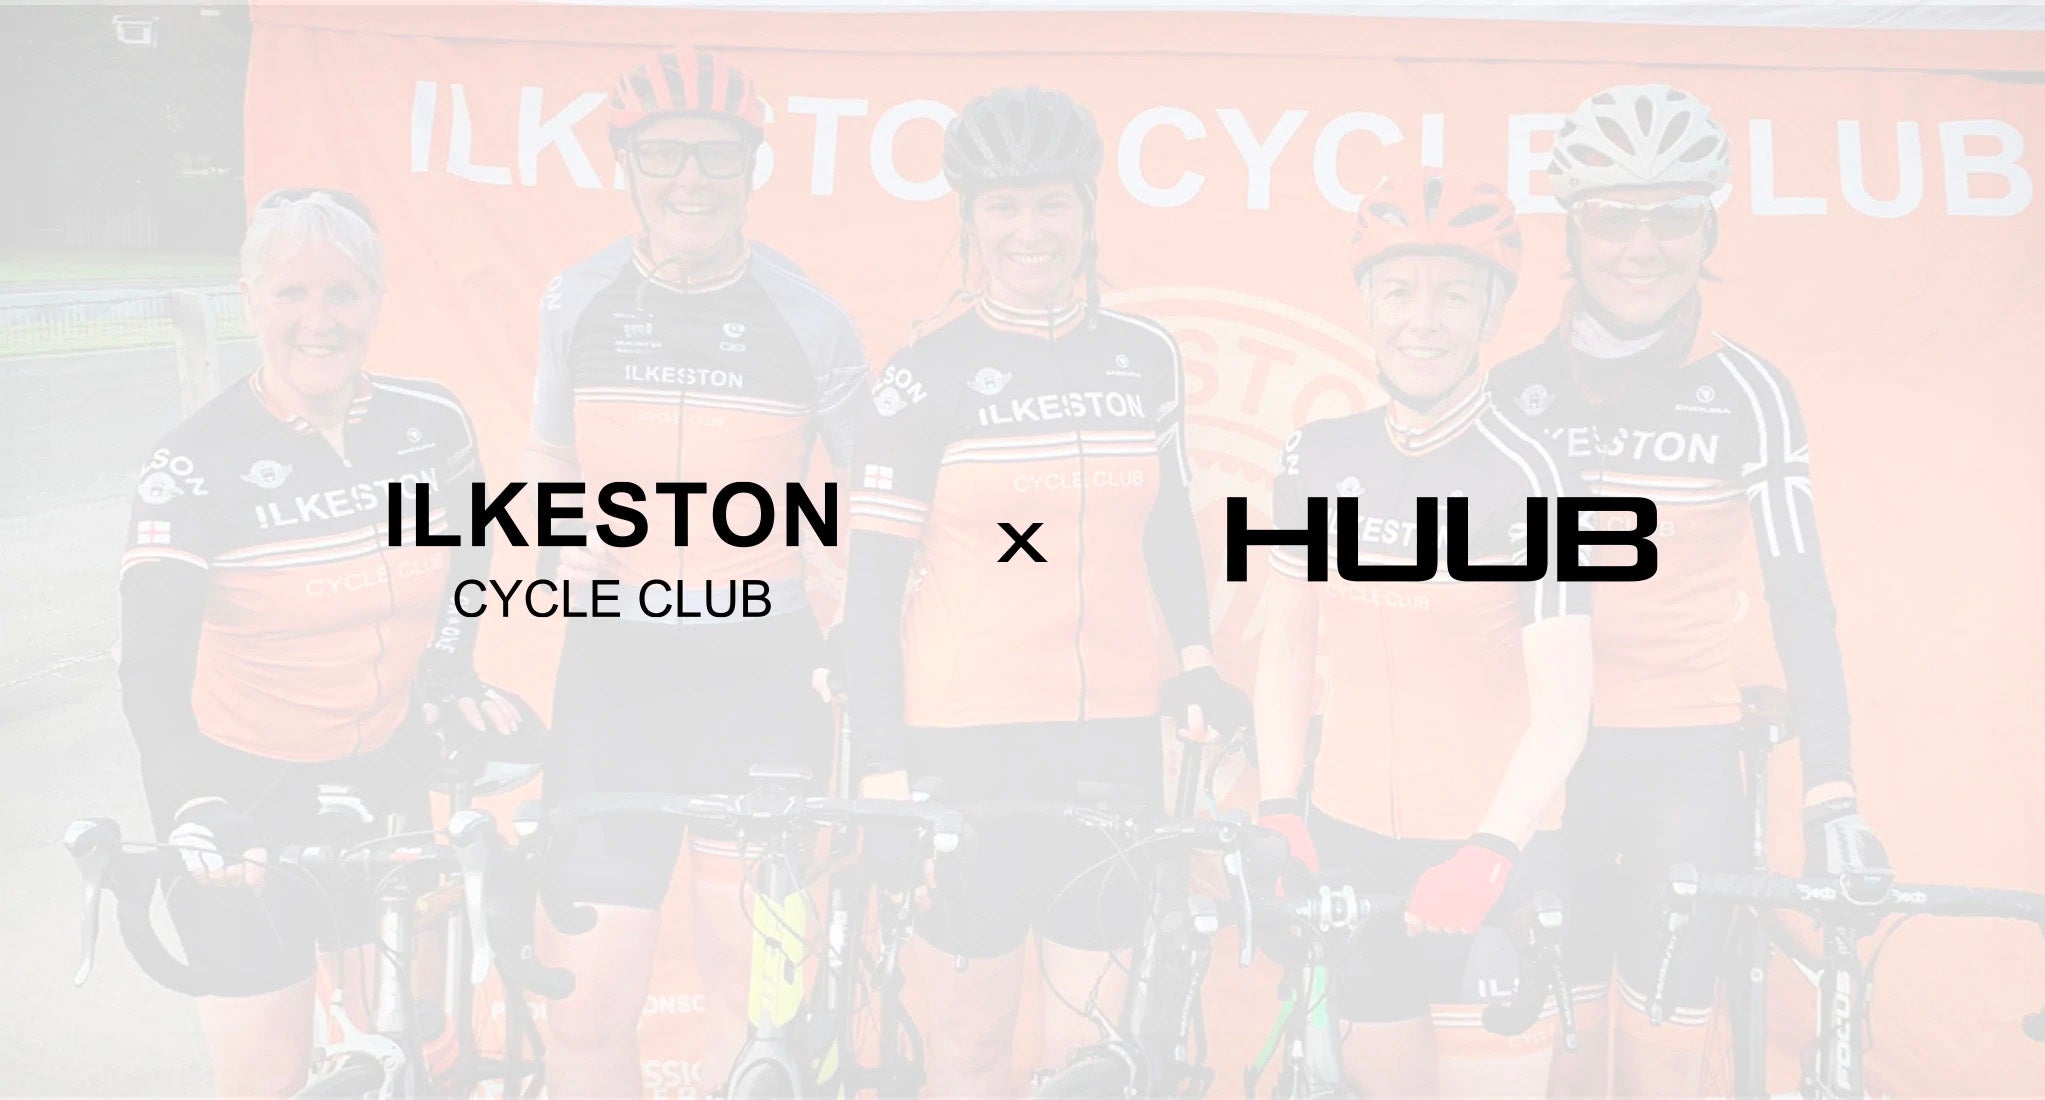 Cycling Weekly 'Club of the Year' Ilkeston CC choose HUUB